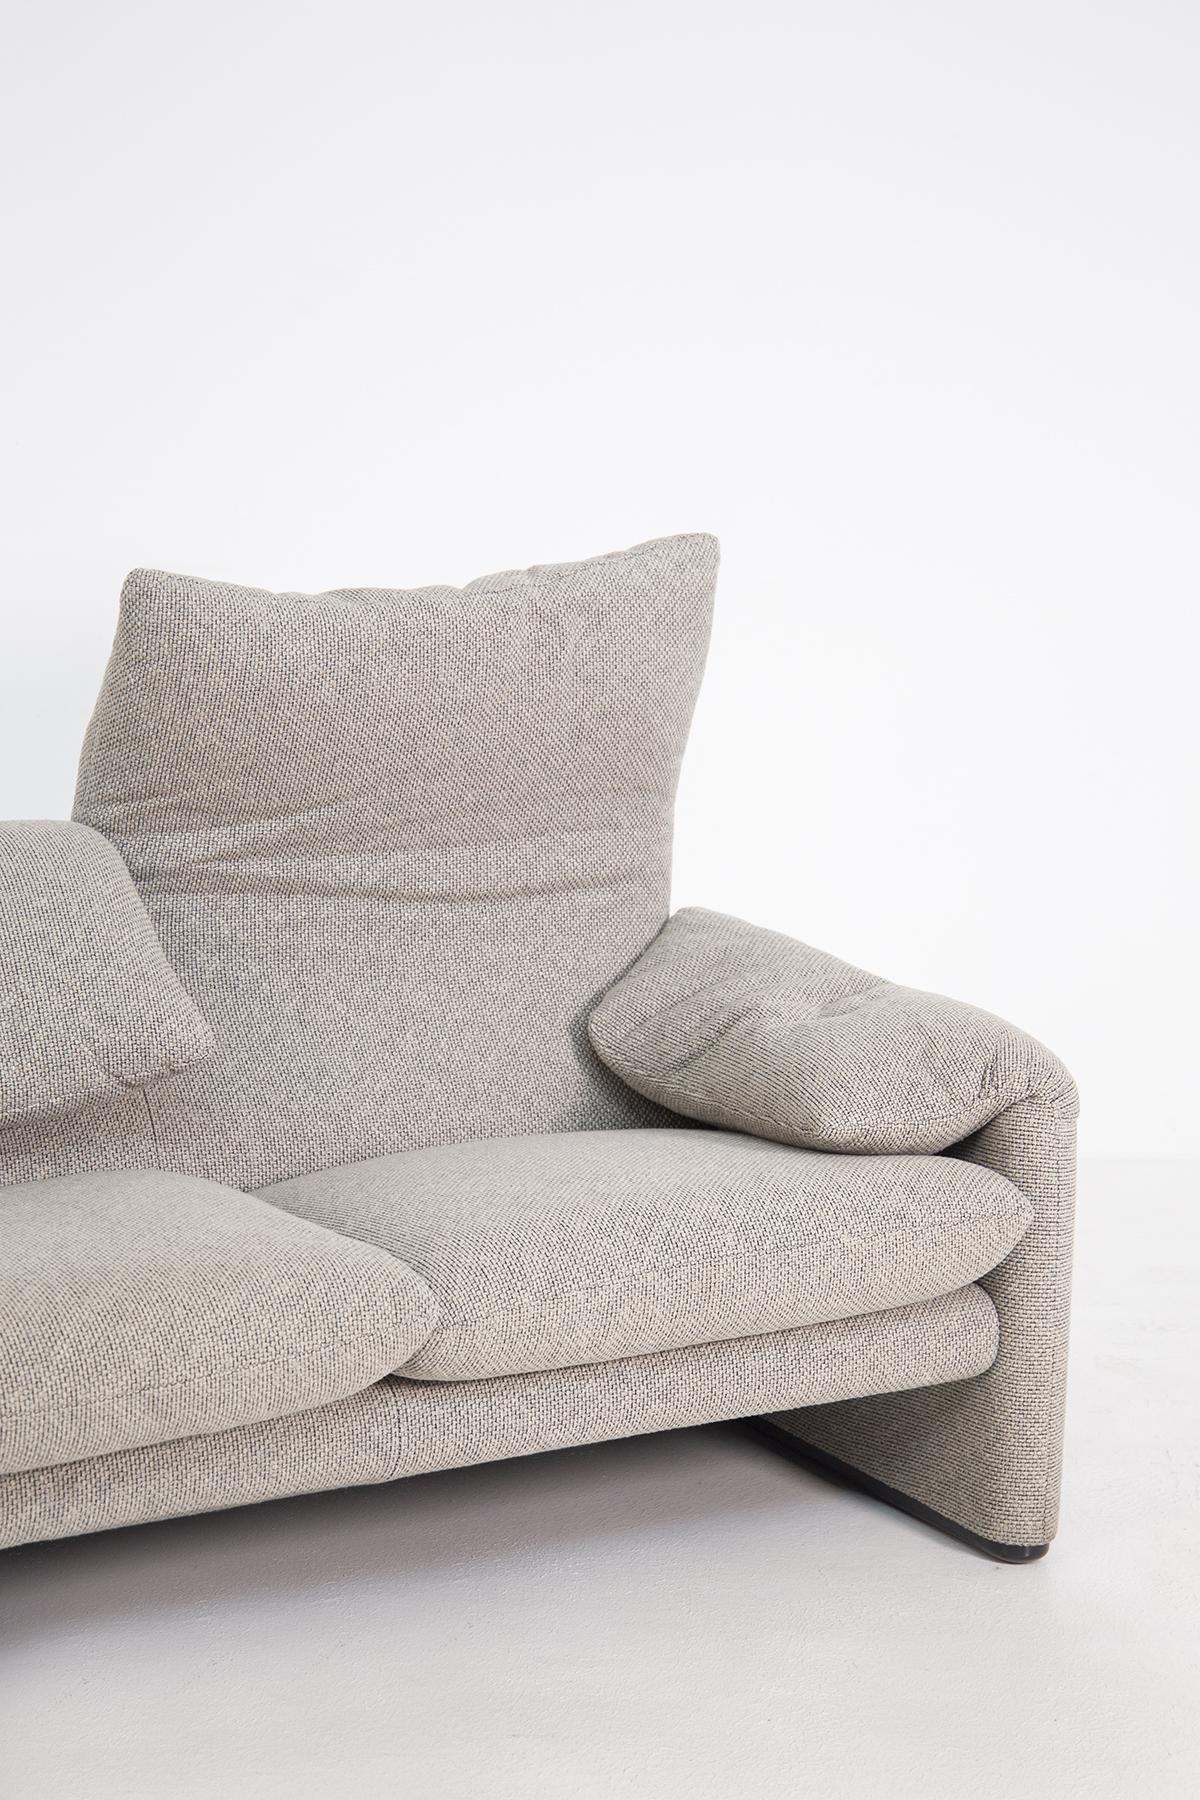 Maralunga Sofa by Vico Magistretti for Cassina in Fabric Grey 3